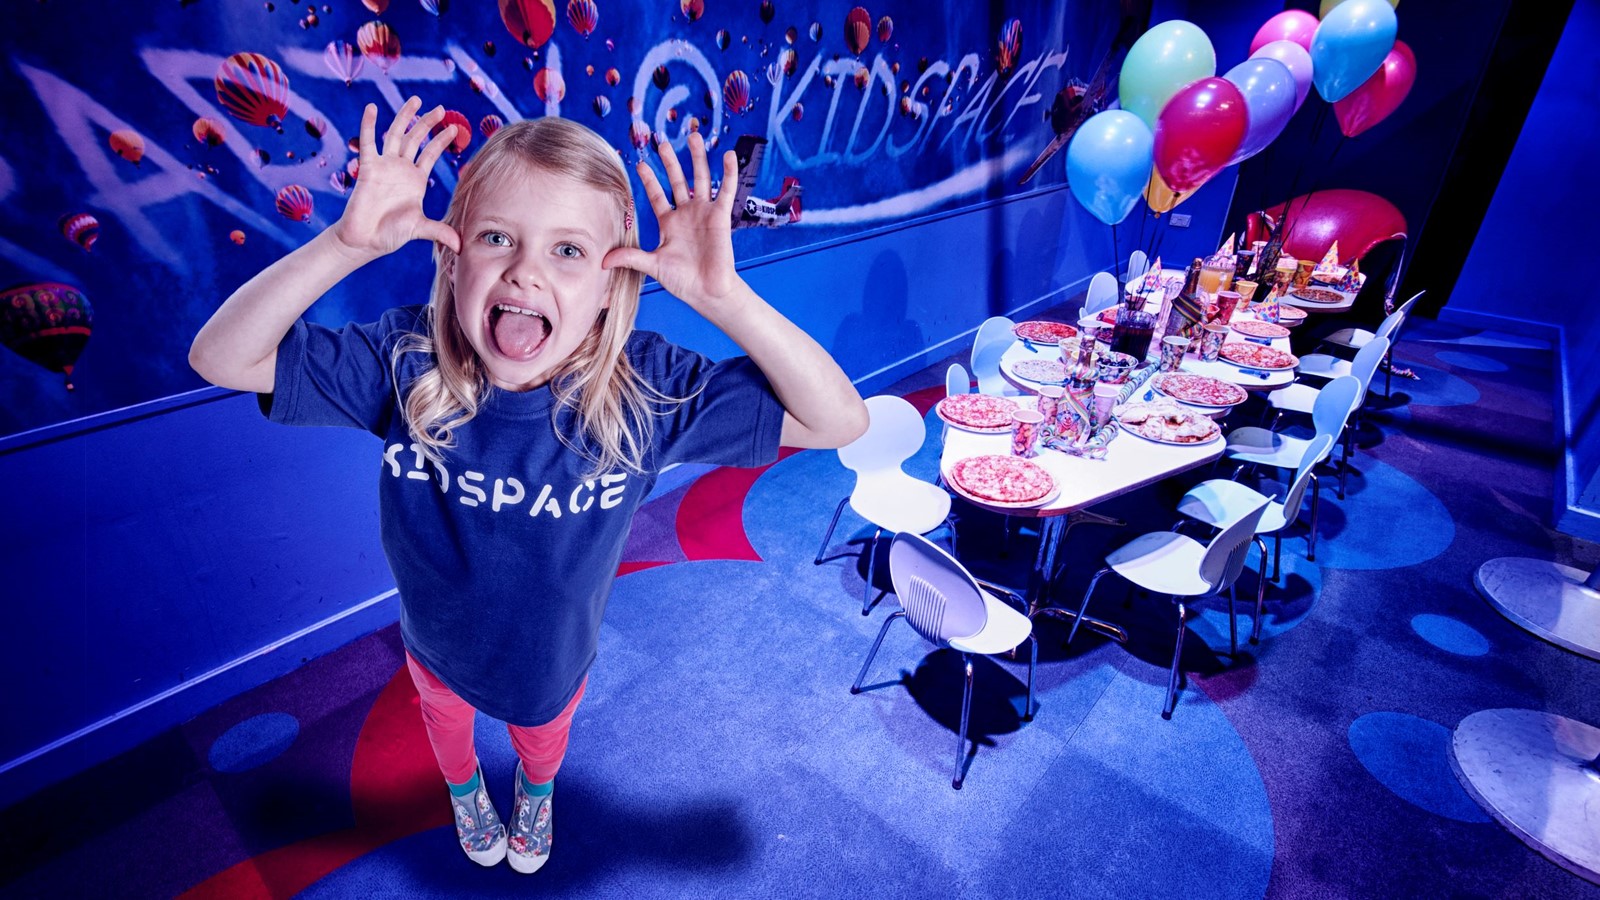 Parties at Kidspace